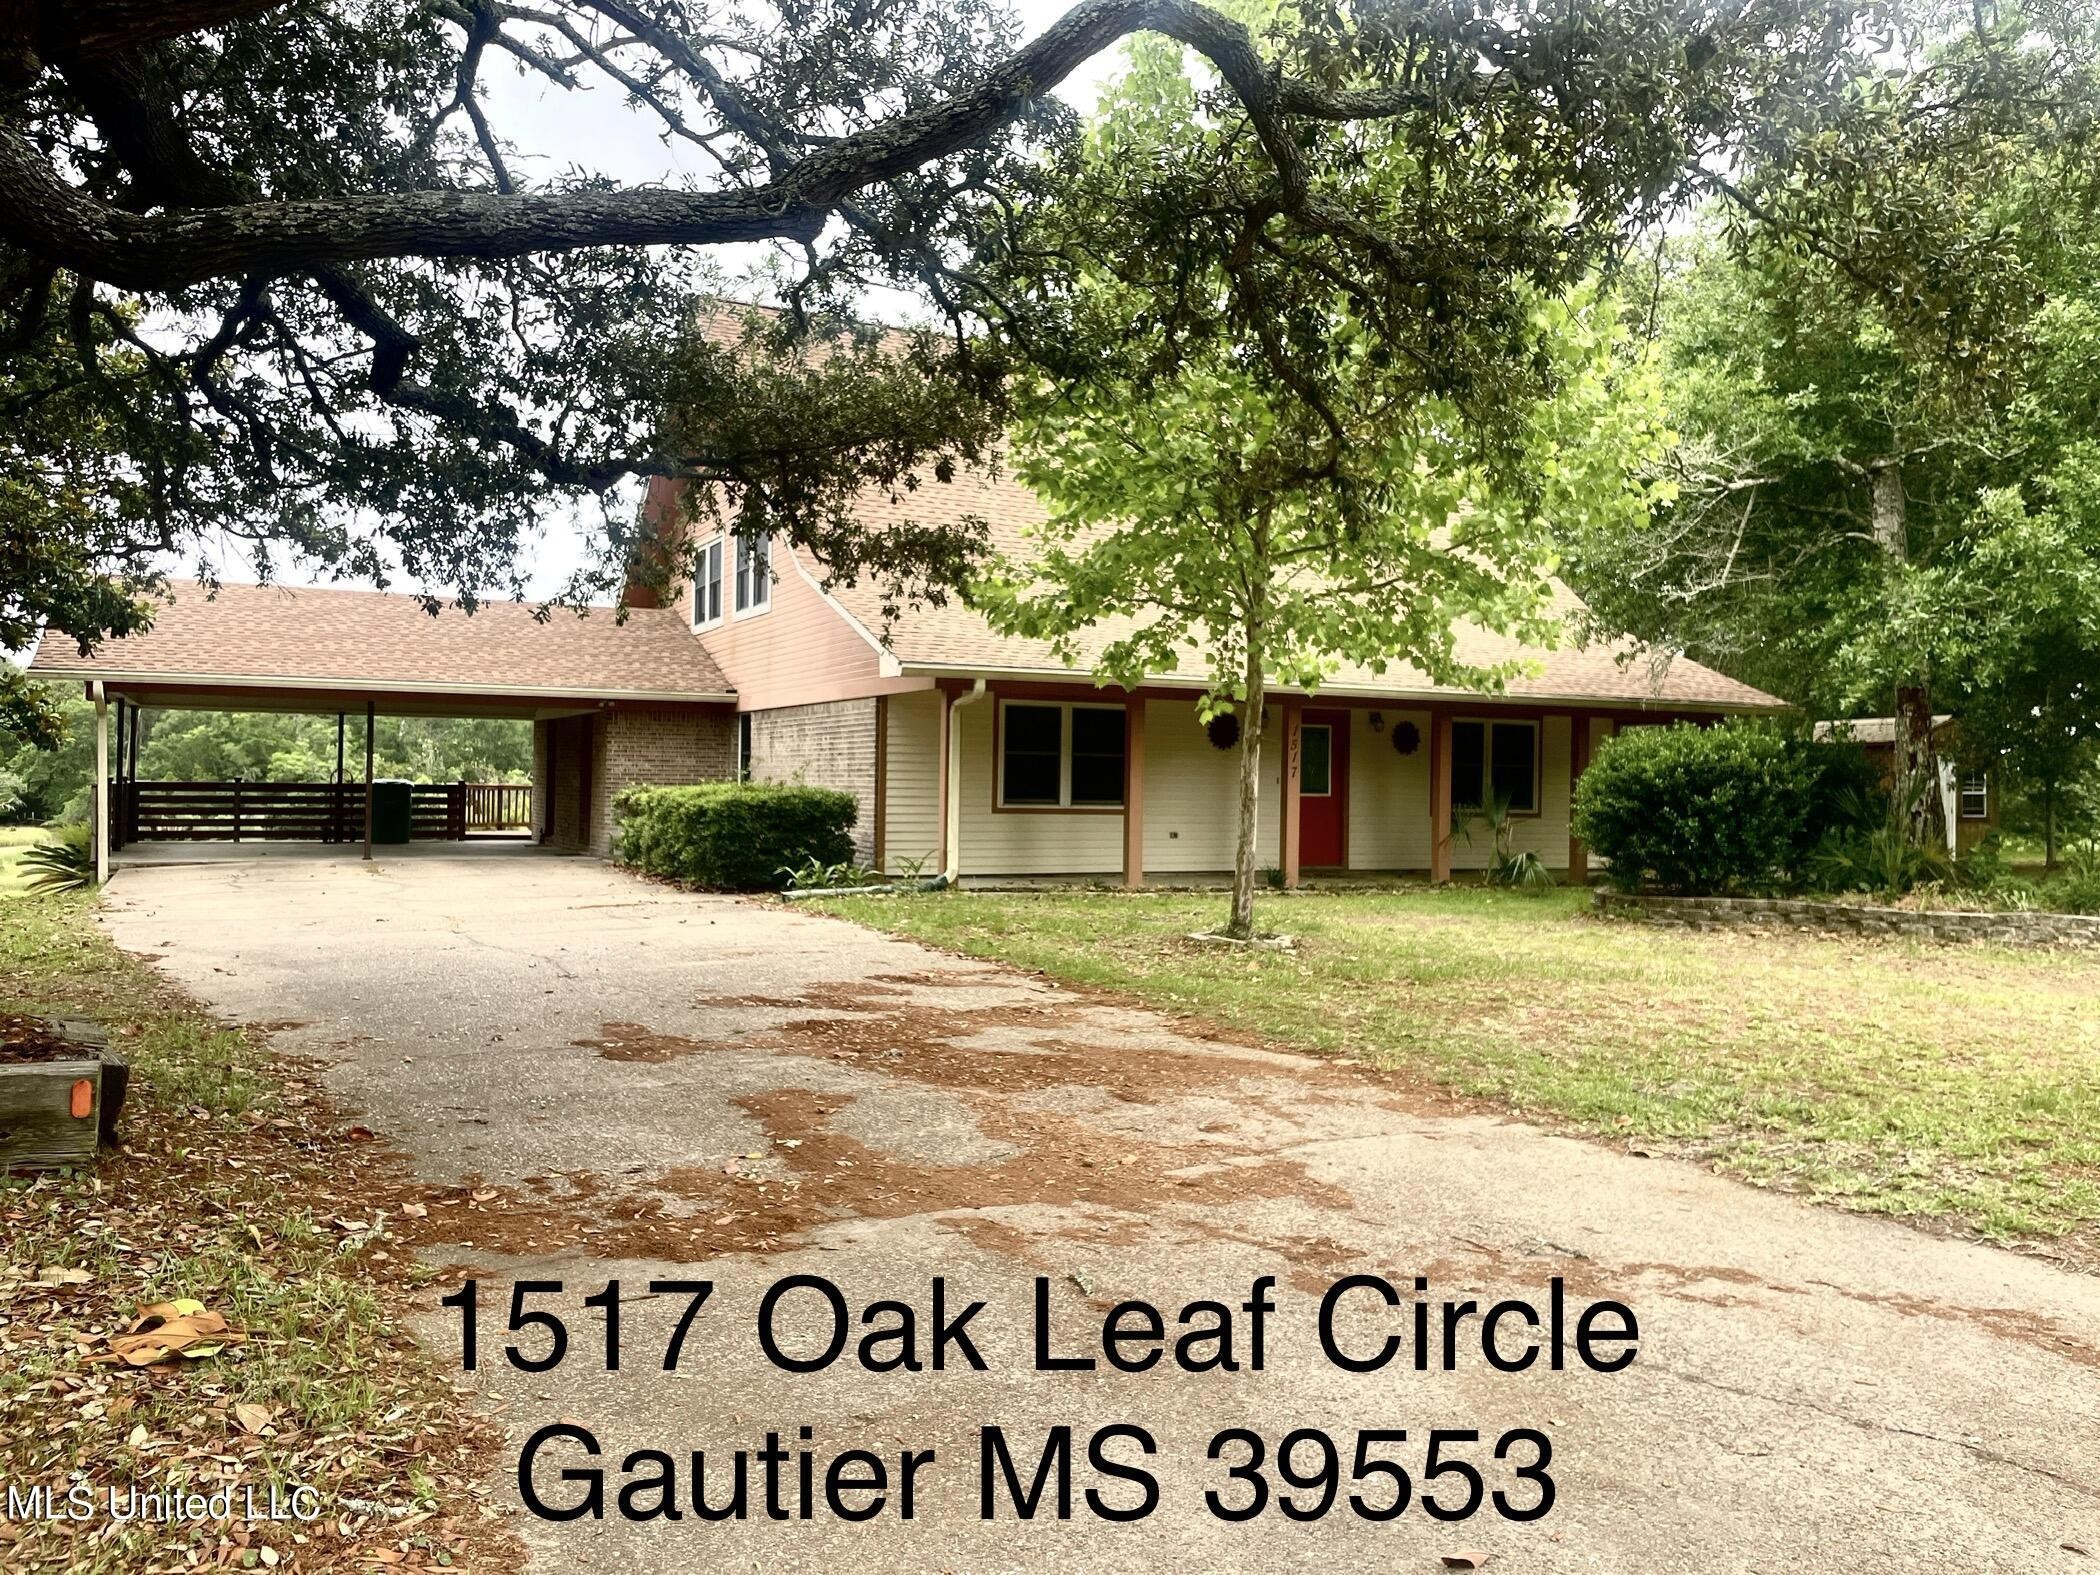 1. 1517 Oak Leaf Circle